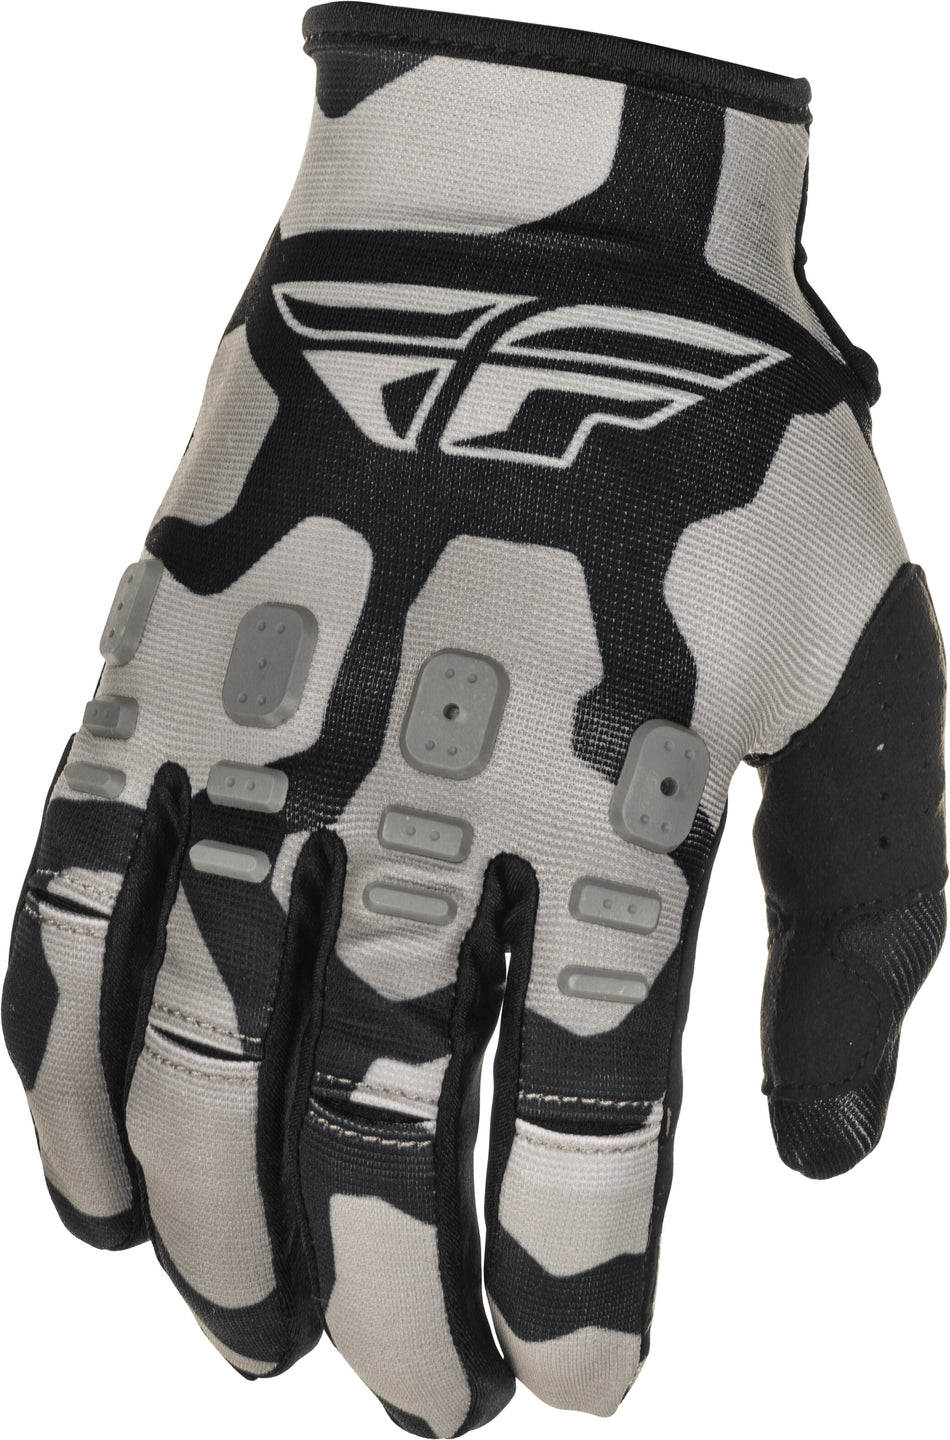 FLY RACING Youth Kinetic K221 Gloves Black/Grey Sz 04 374-51004